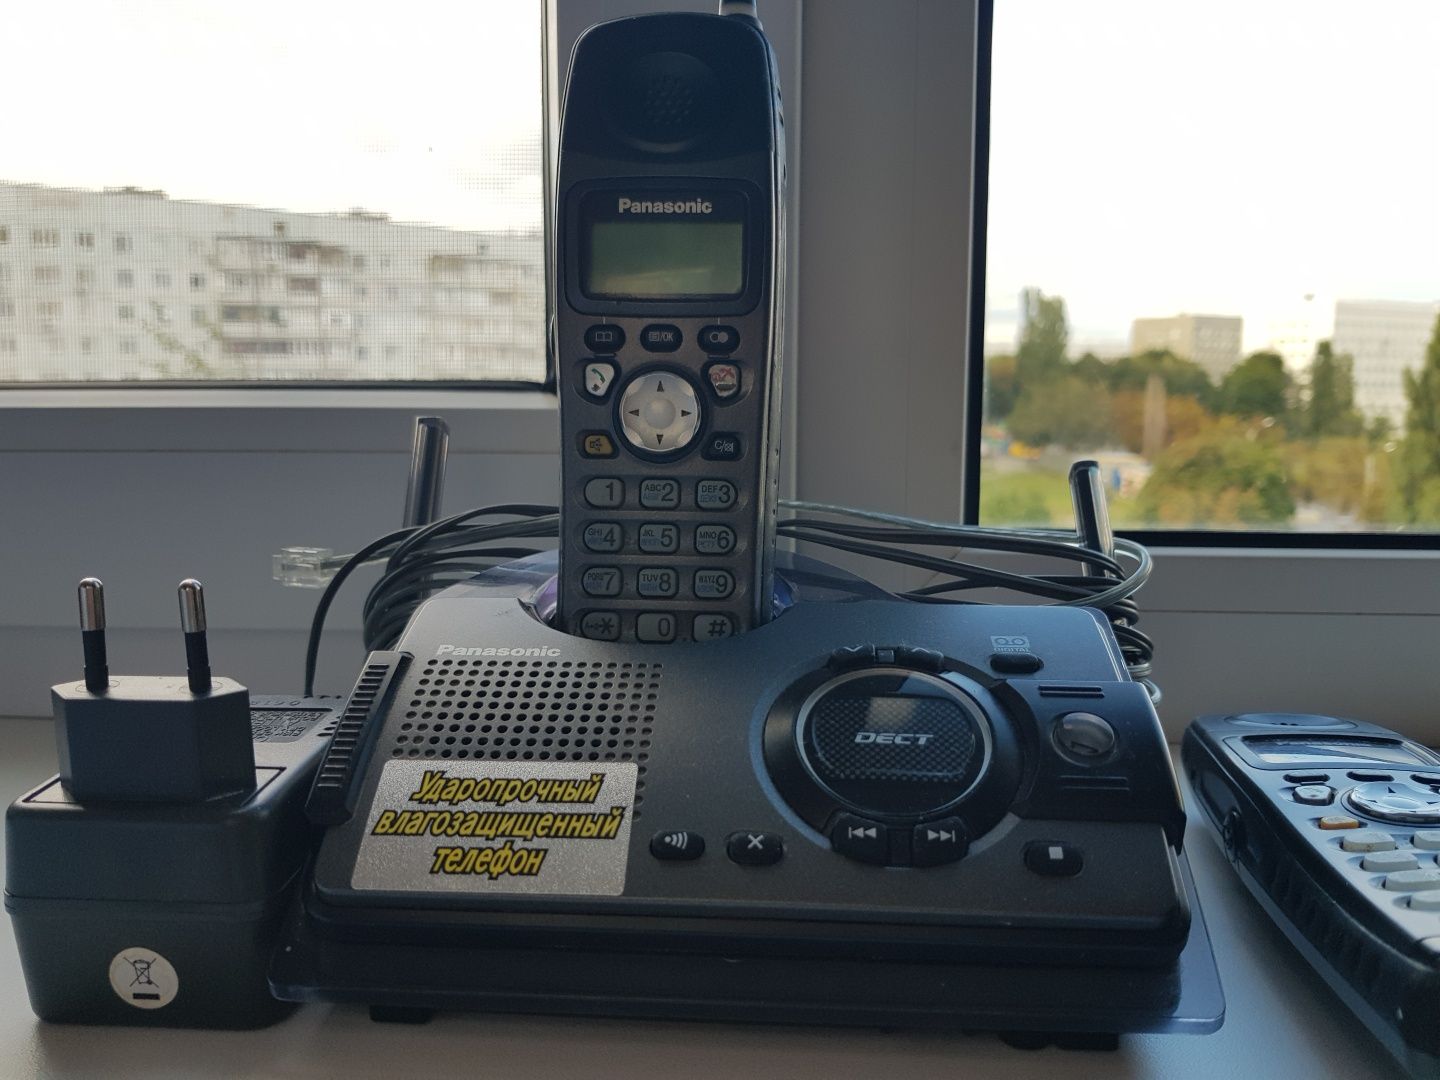 Радио телефон Panasonic KX-TCD297UAT